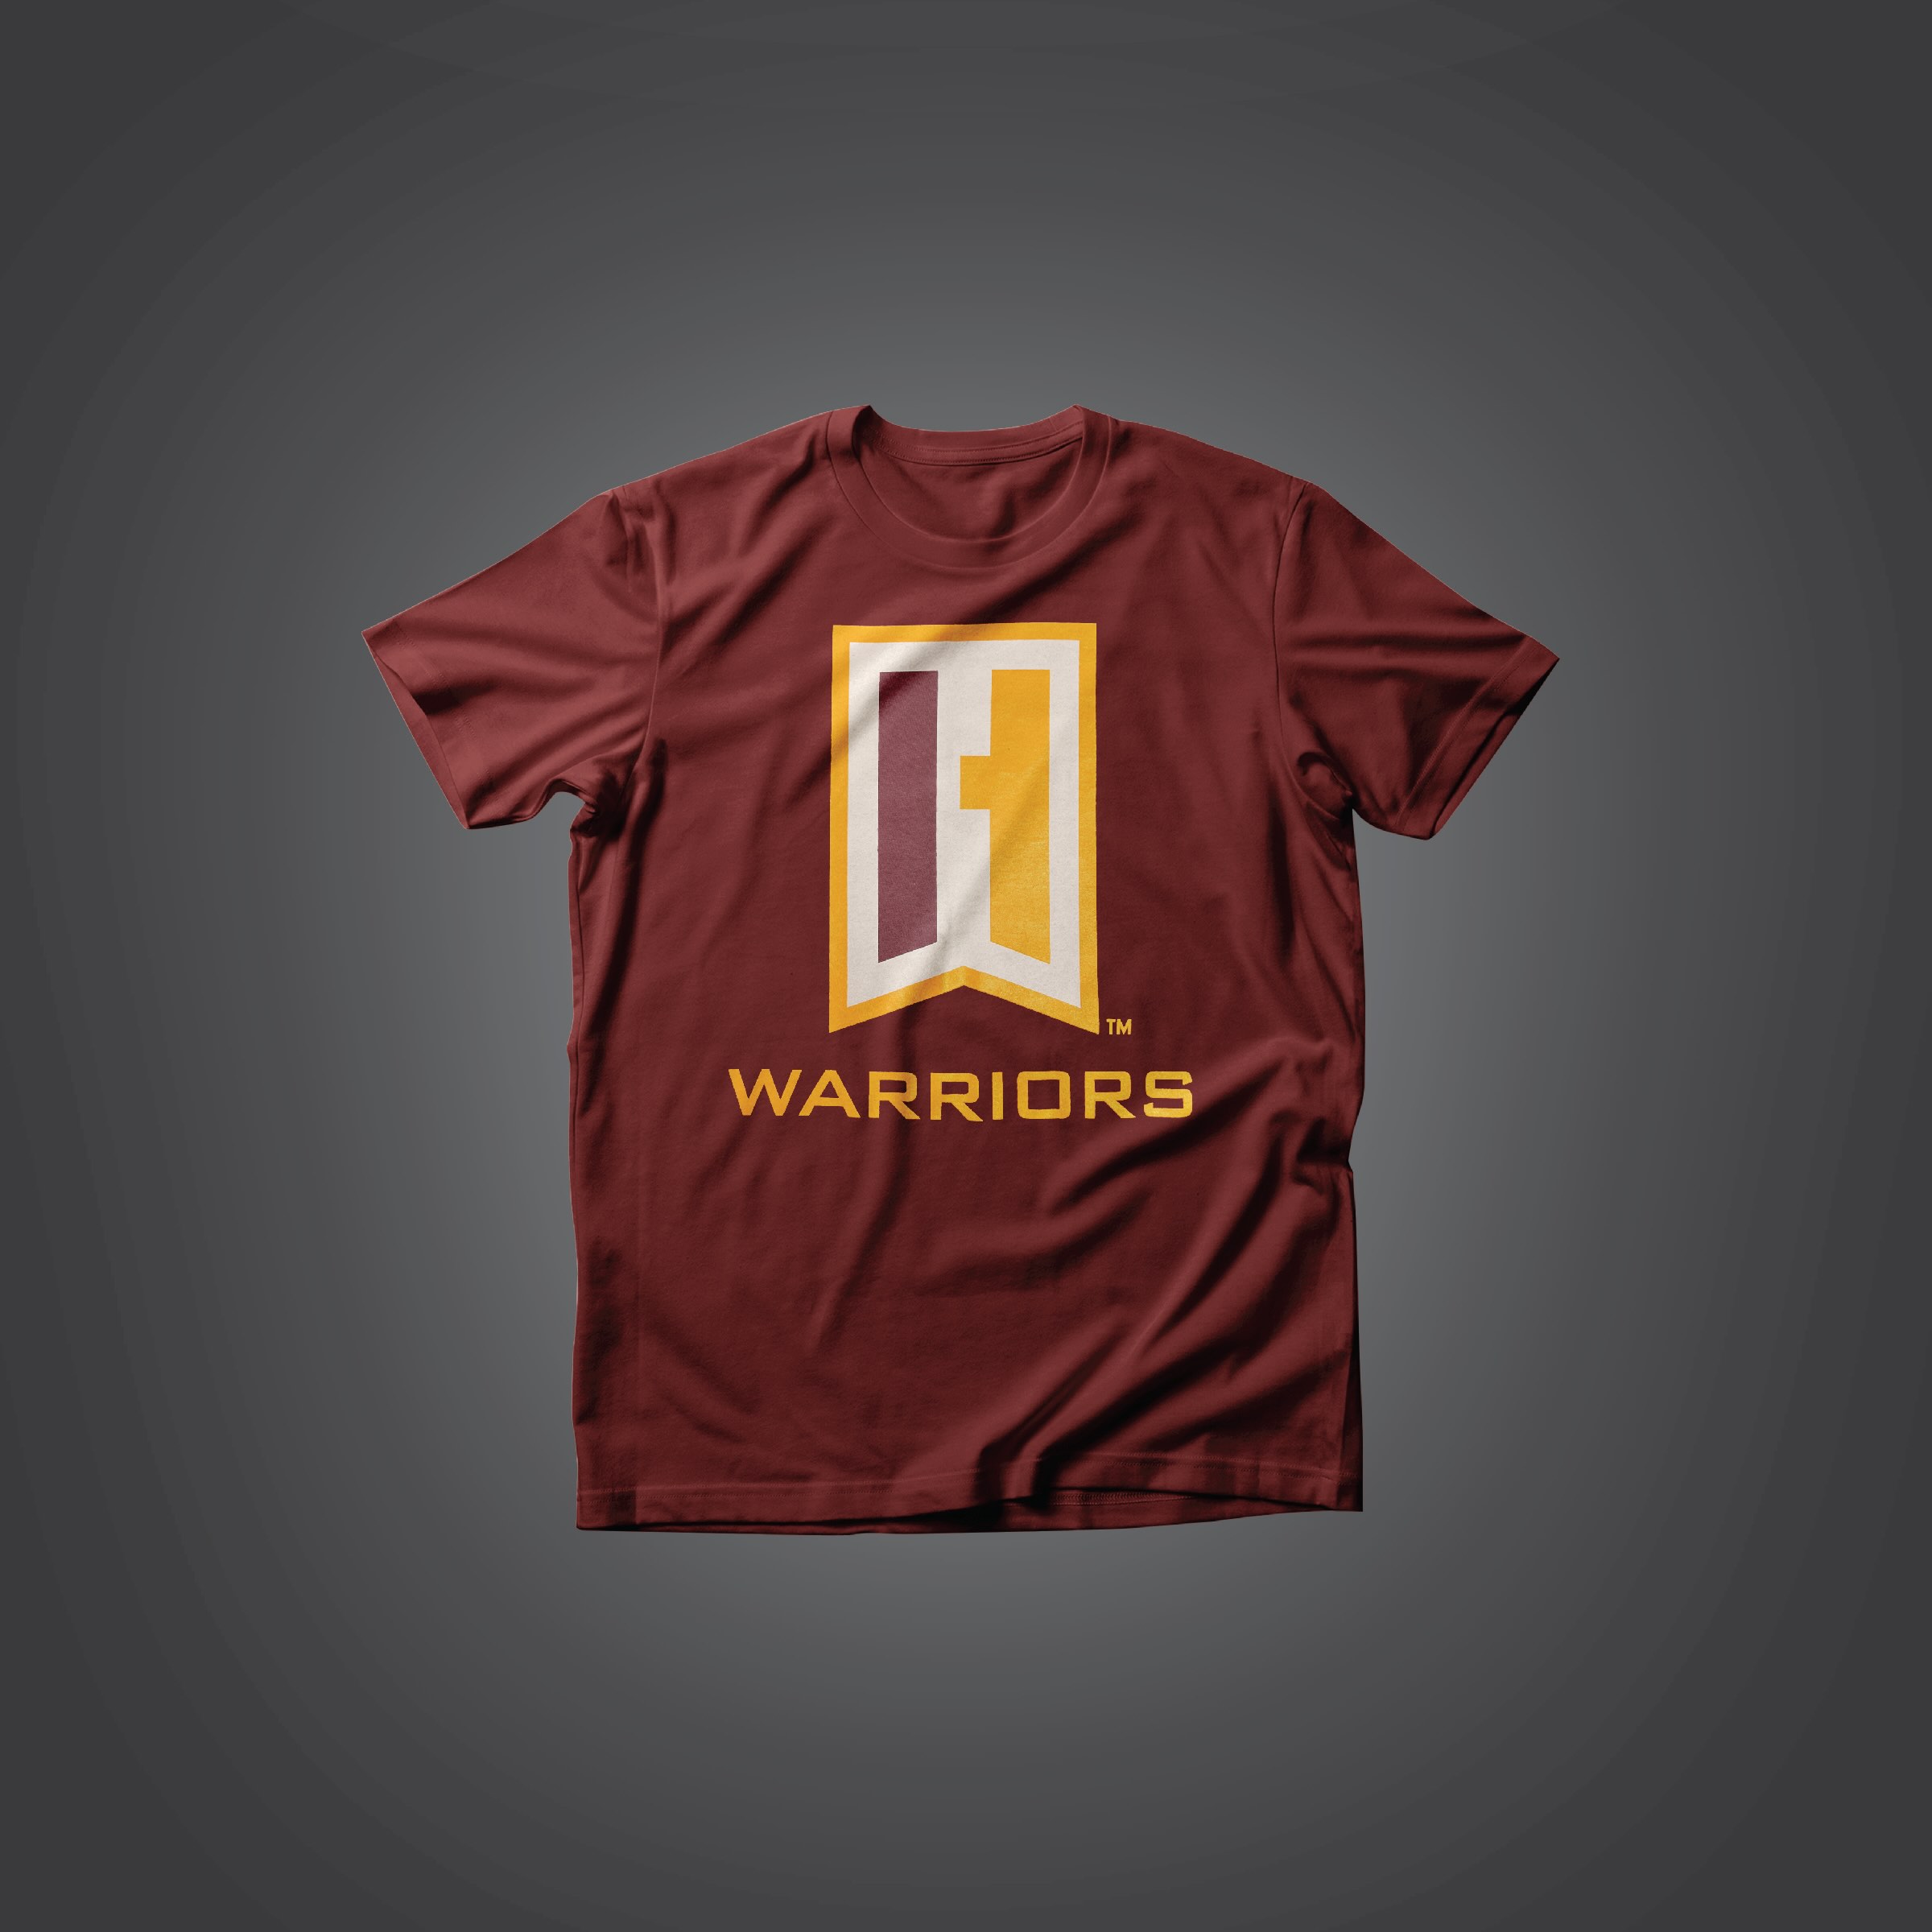 Athletic IH Warrior T-Shirt